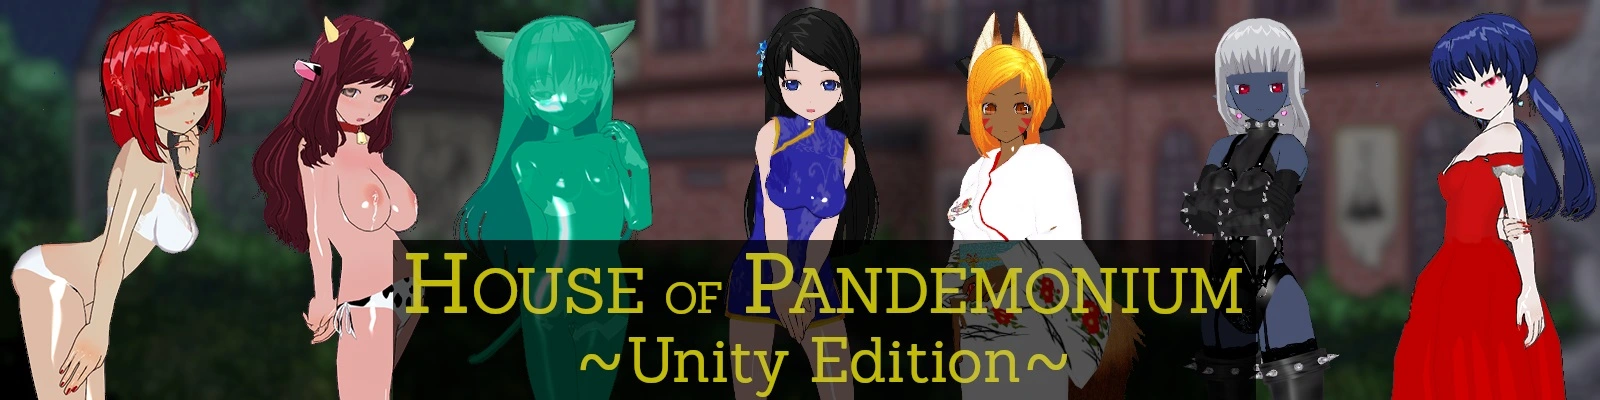 Pandemonium Classic: Unity Edition main image